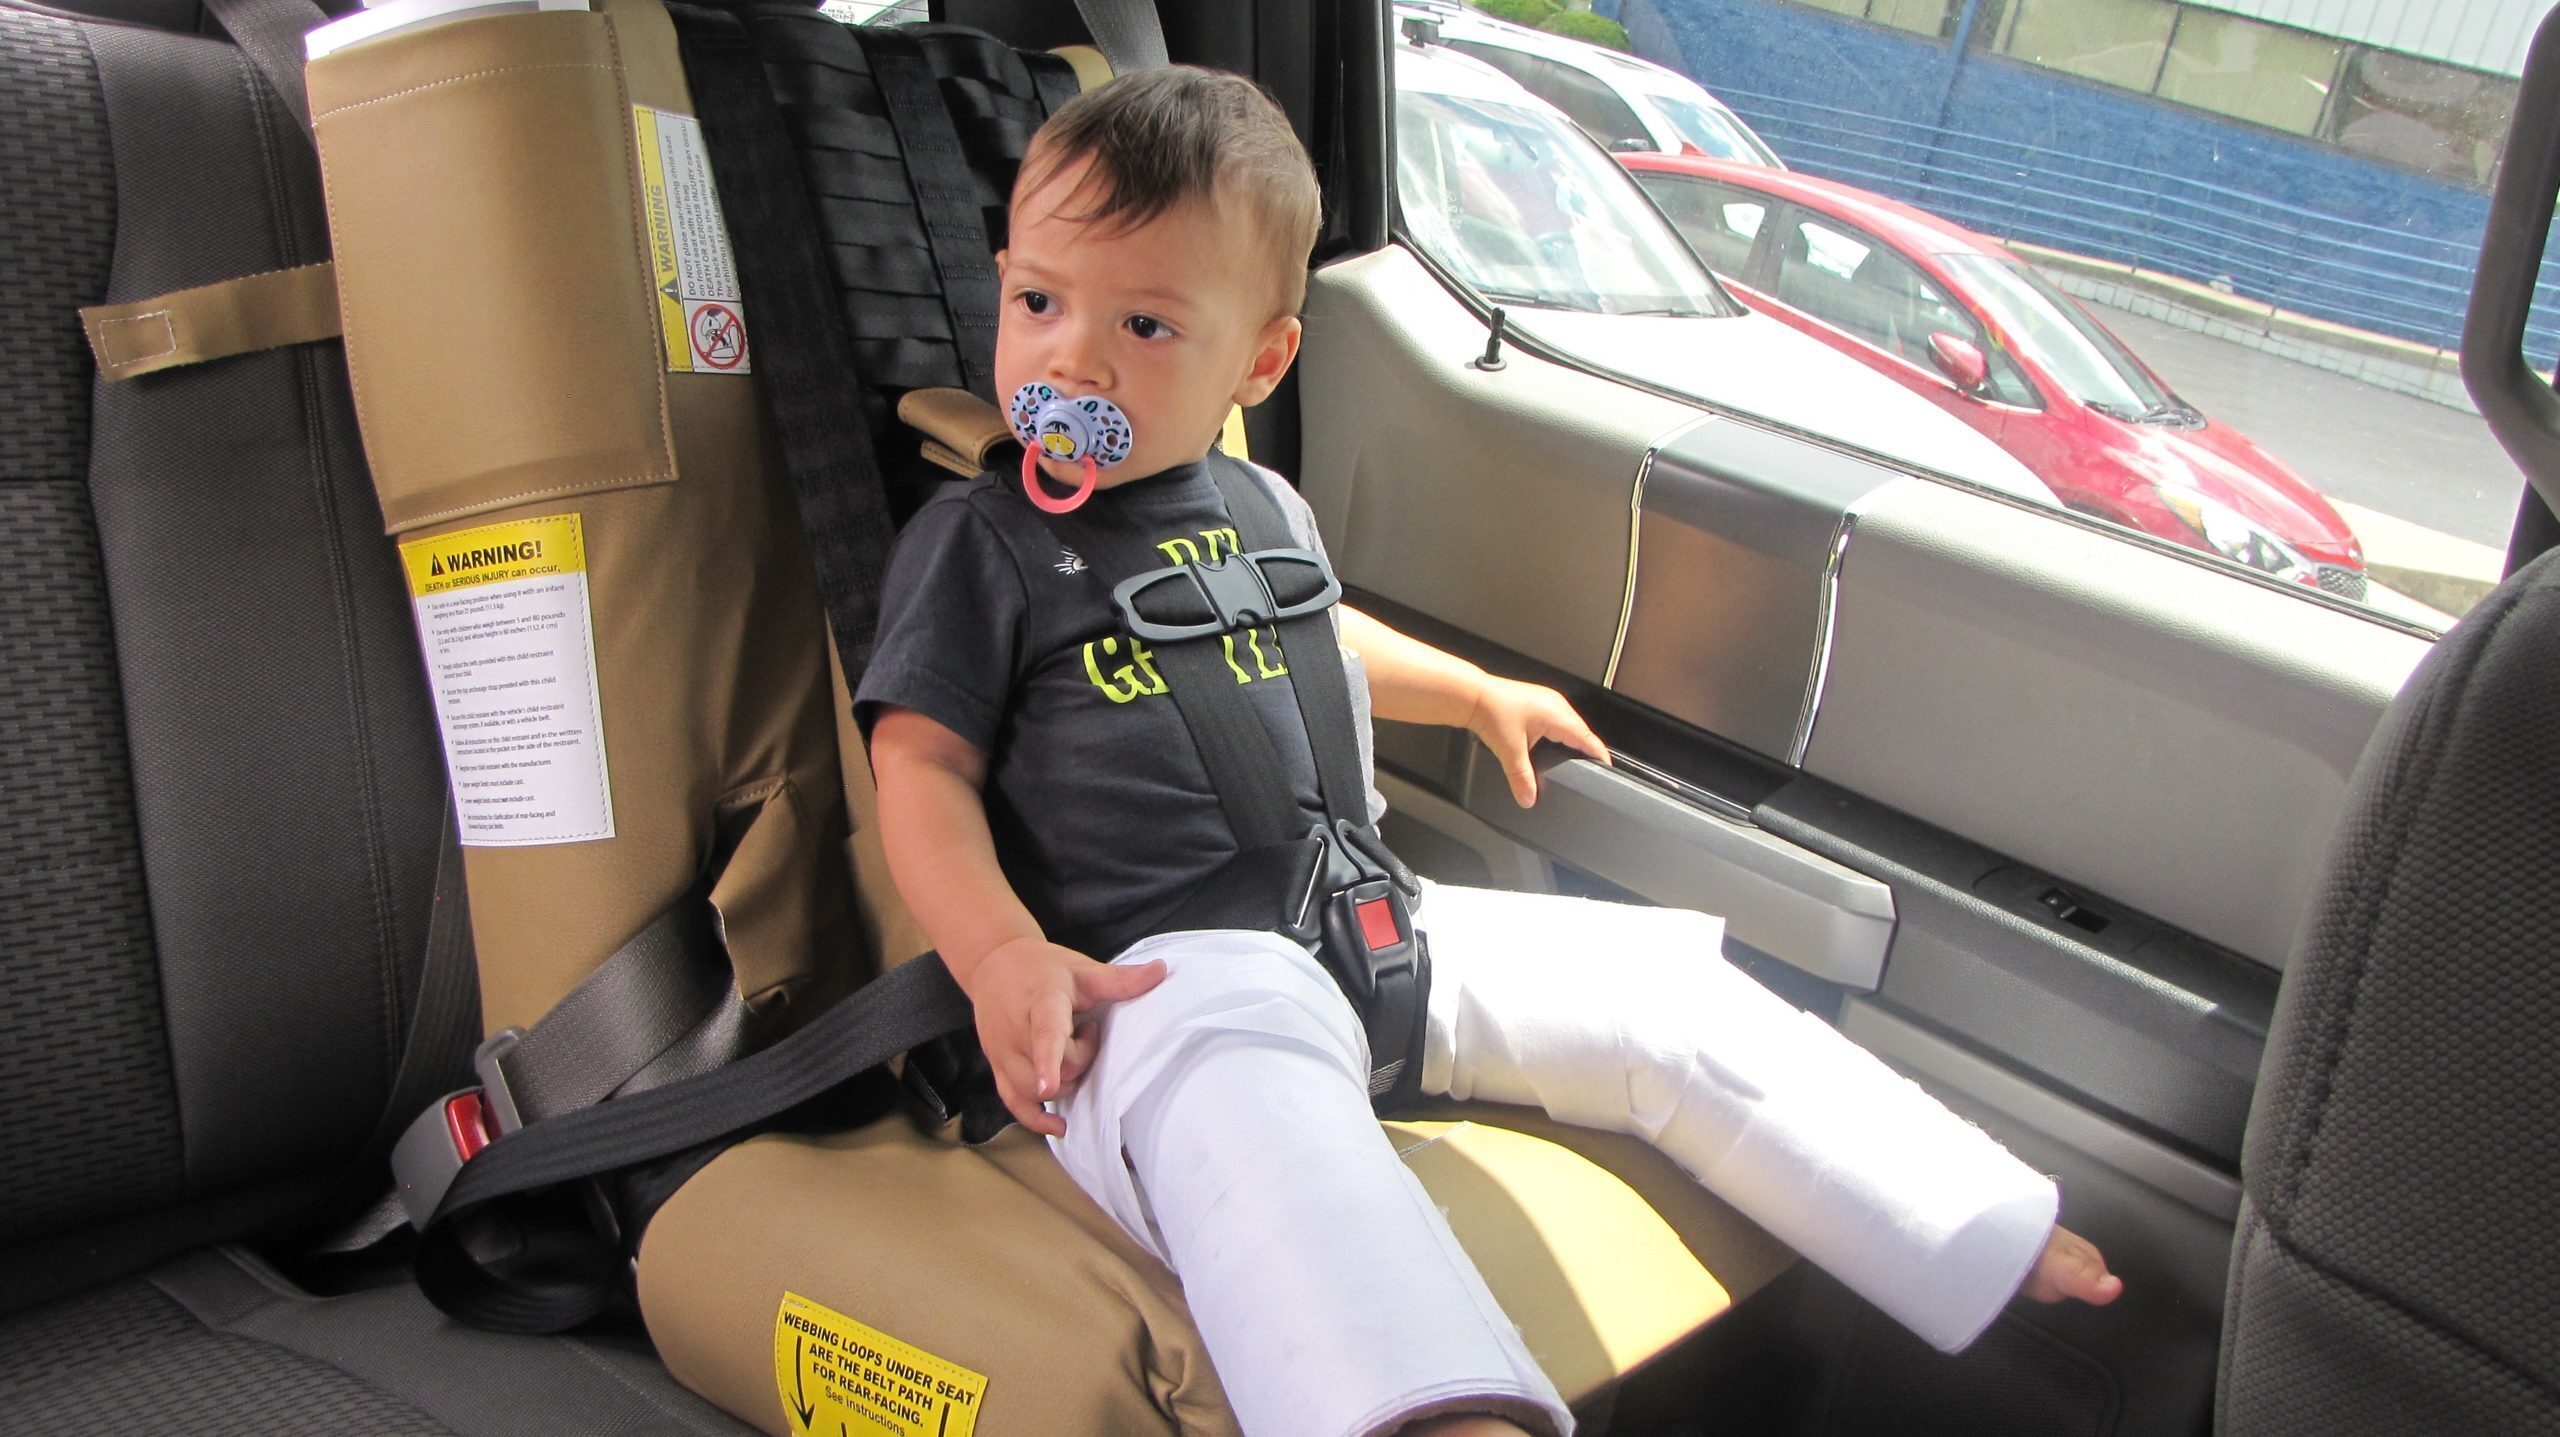 Roosevelt Child Safety Car Seat